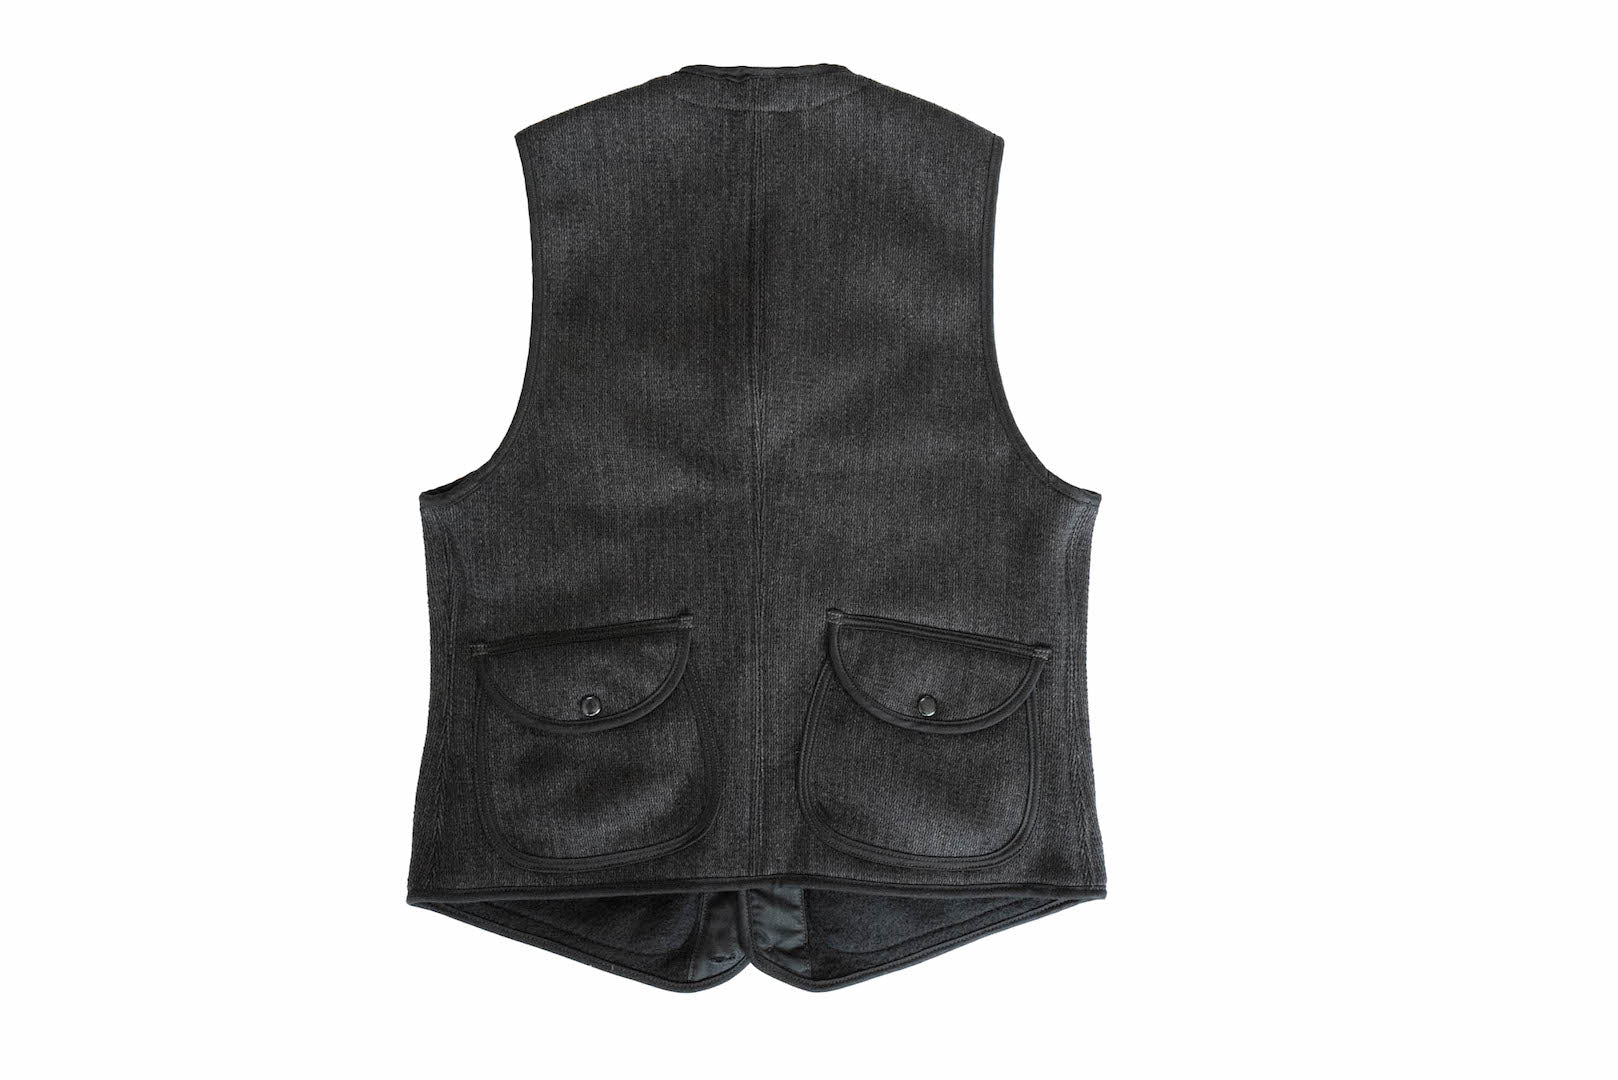 Freewheelers "Bridgeport" Hunting Vest (Charcoal Black)